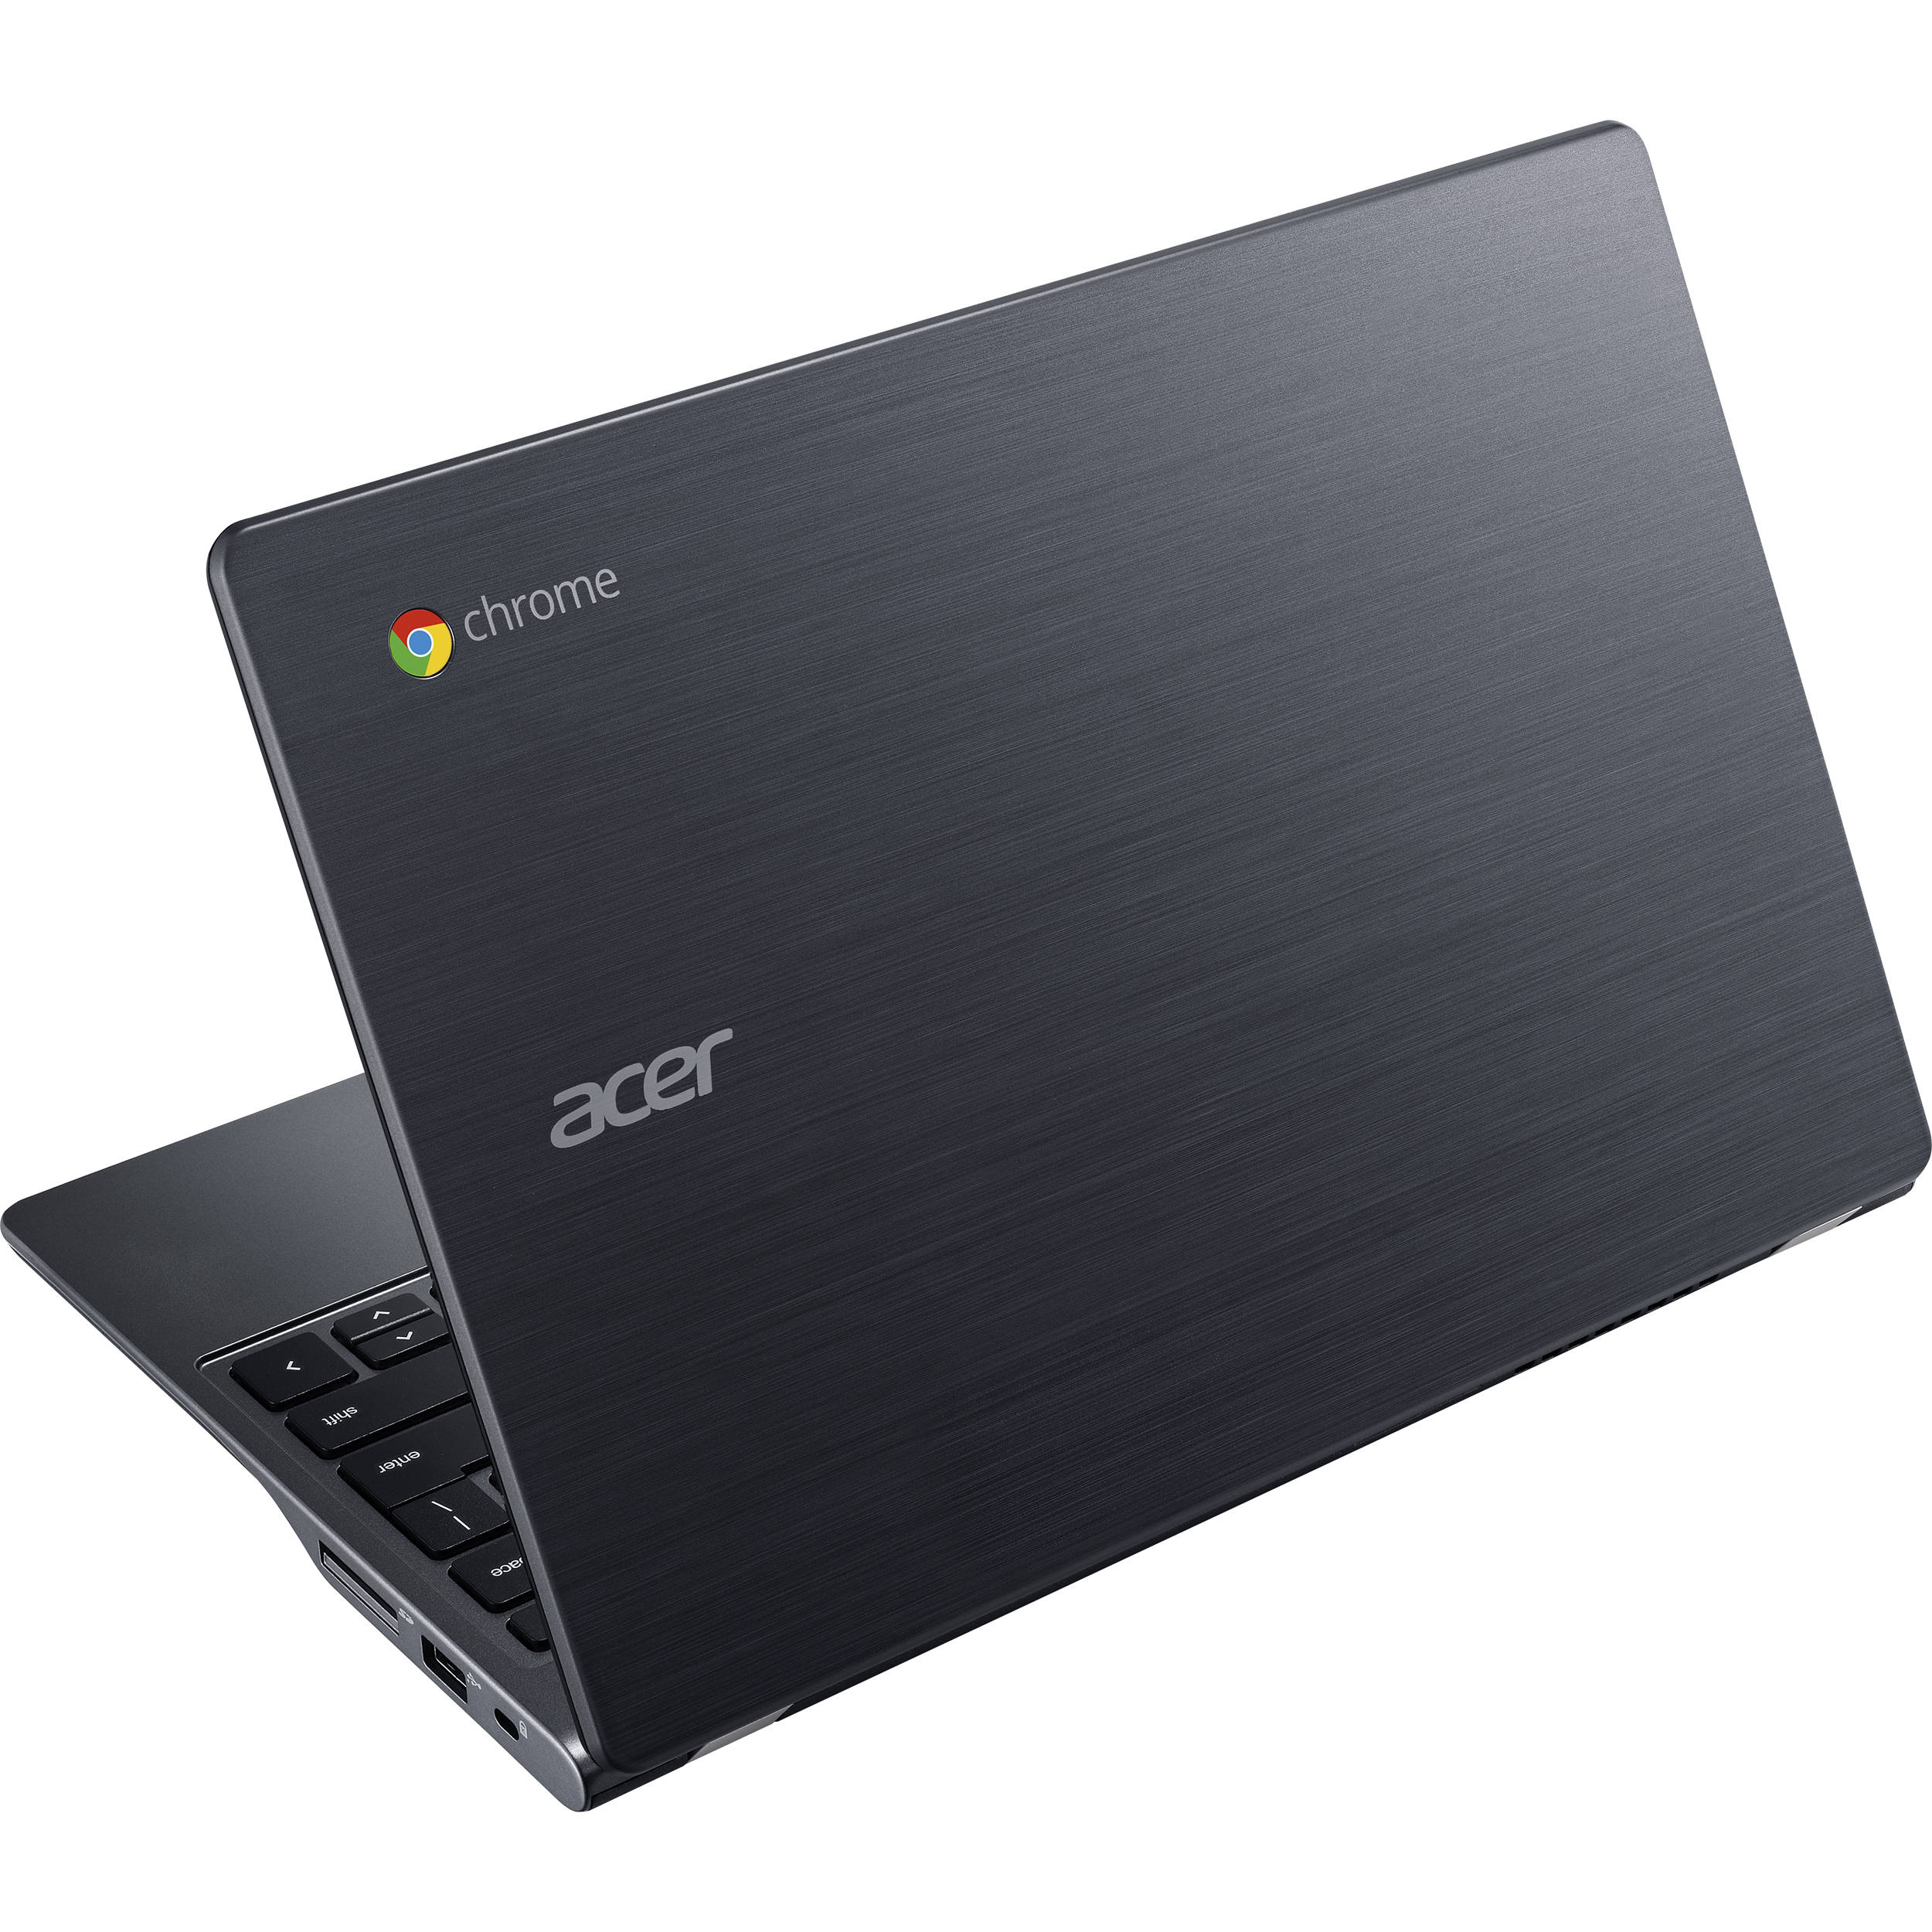 Restored Acer Chromebook C740-C4PE 11.6" Celeron 3215U 1.7Ghz 4Gb 16Gb WiFi HDMI Charger (Refurbished) - image 4 of 4